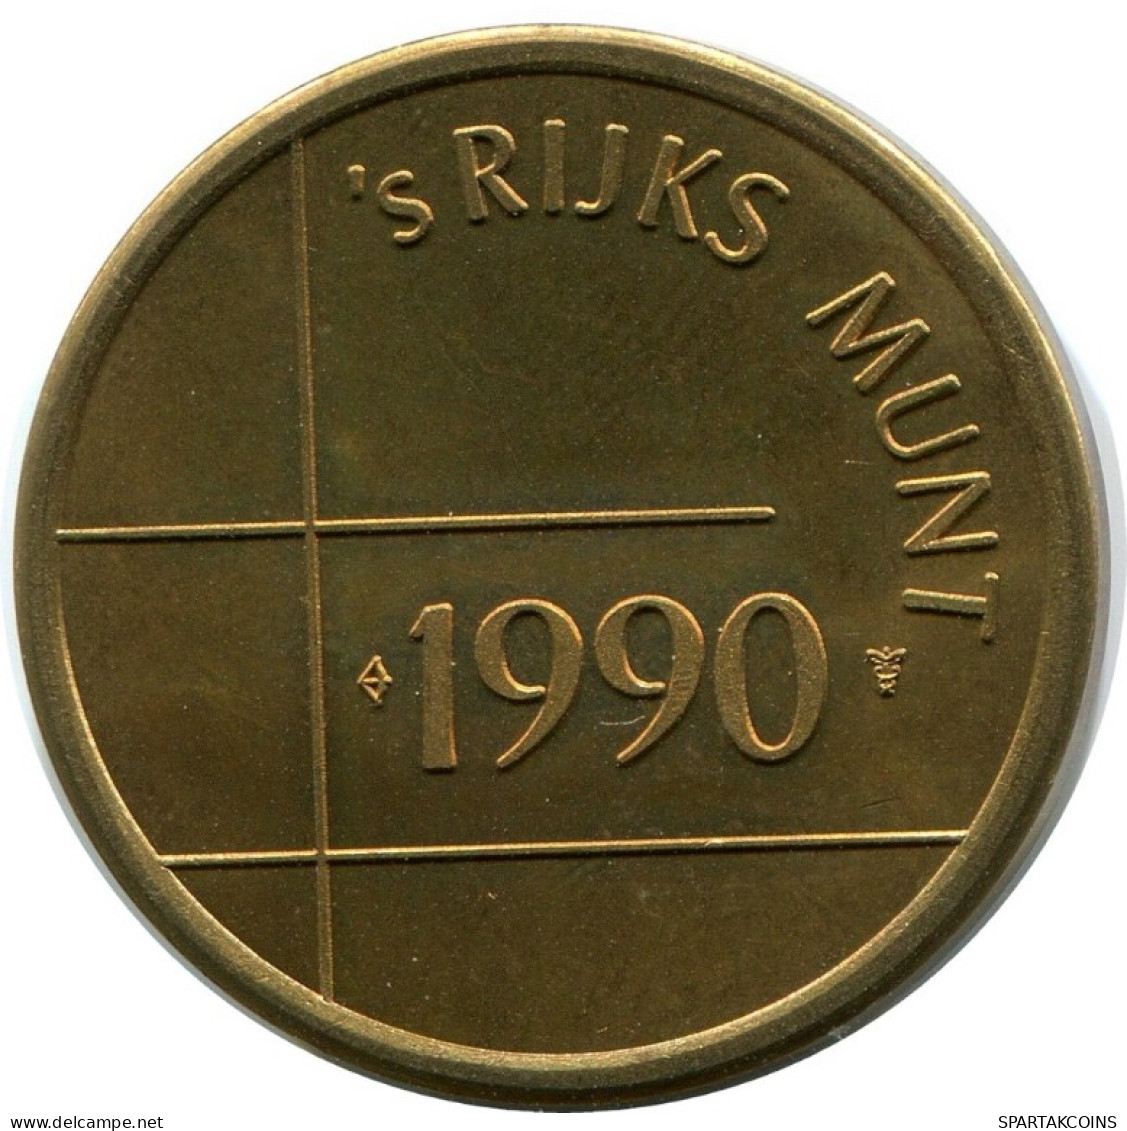 1990 ROYAL DUTCH MINT SET TOKEN NETHERLANDS MINT (From BU Mint Set) #AH029.U.A - Mint Sets & Proof Sets